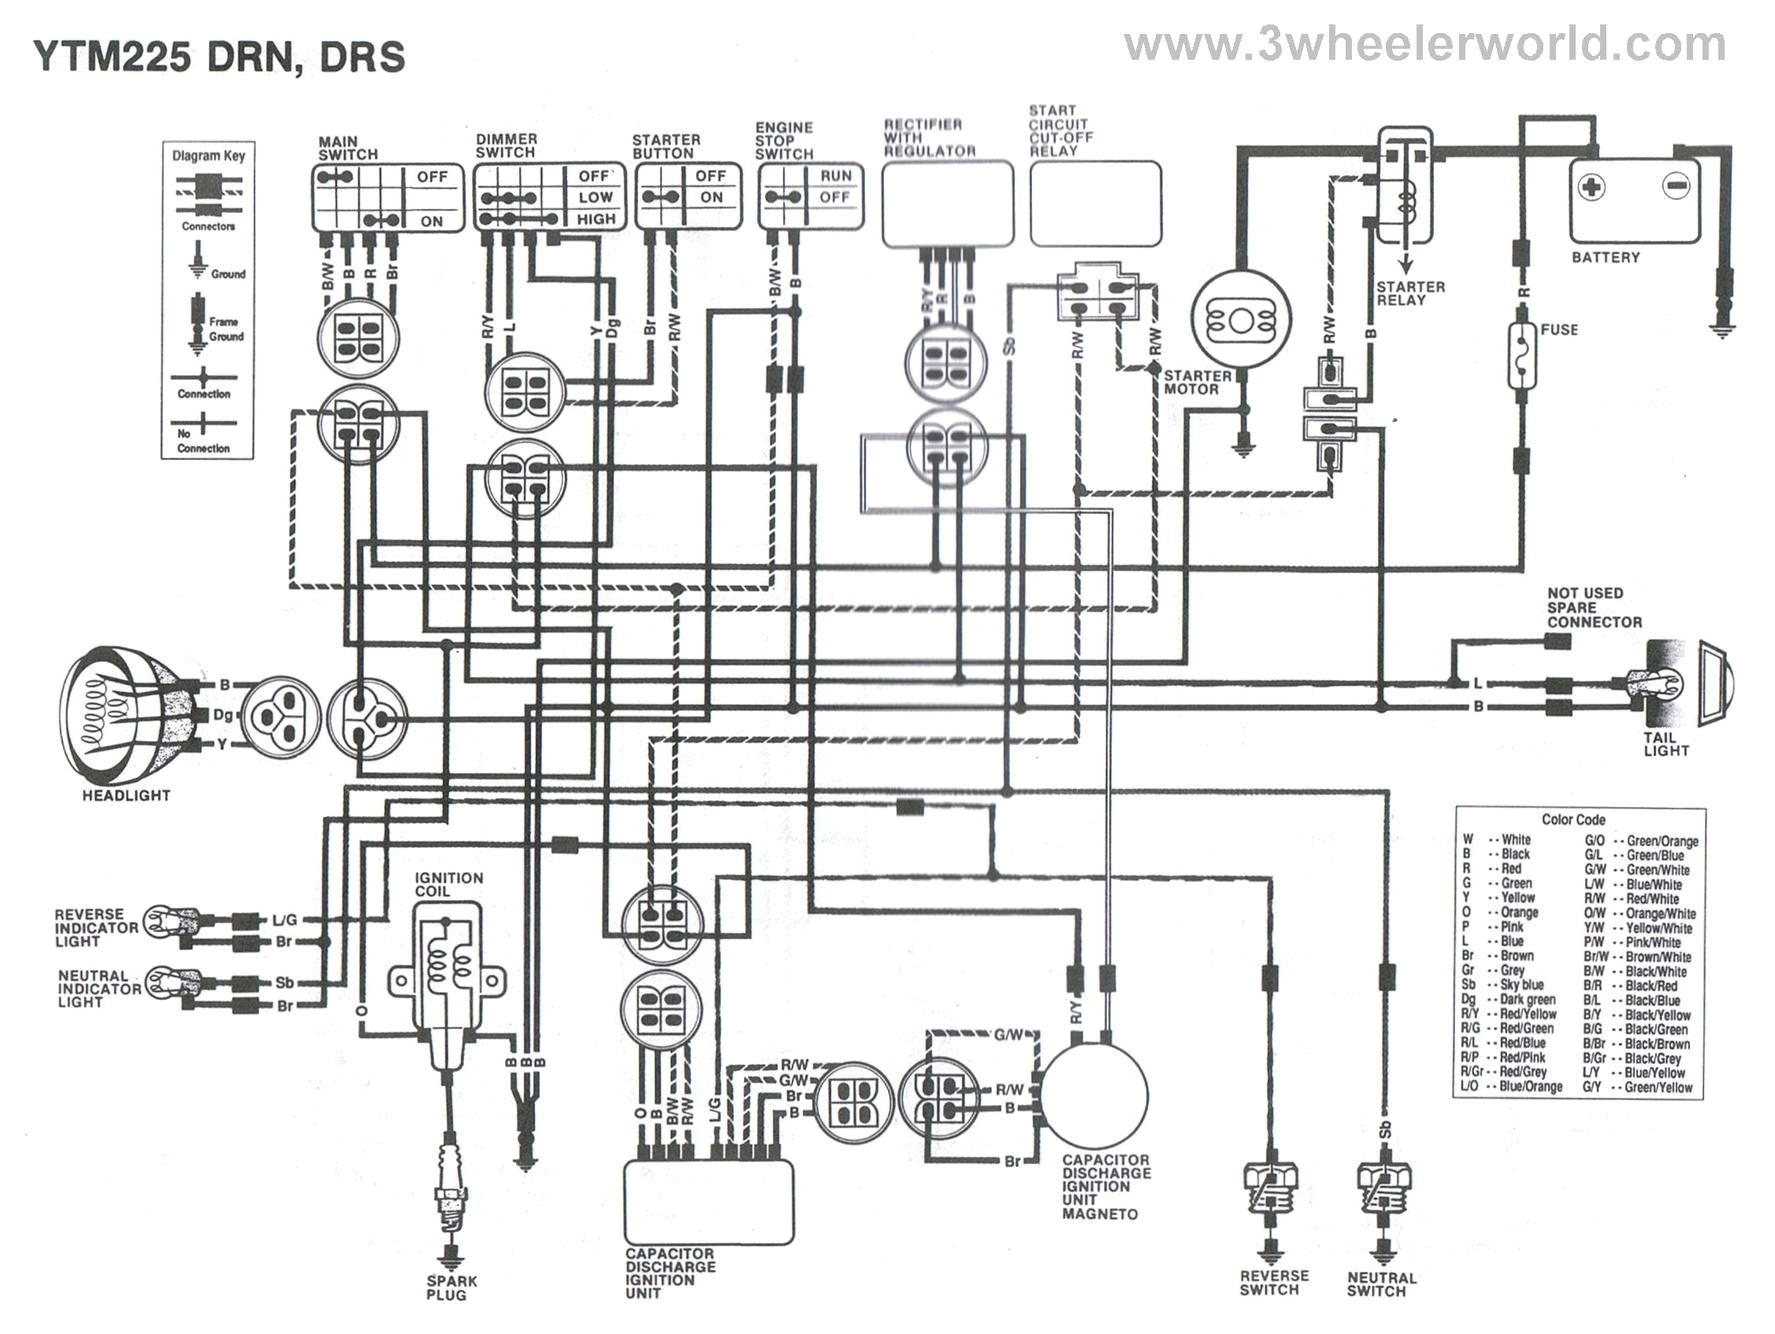 yamaha srv 540 wiring diagram wiring diagram schematic yamaha srv 540 wiring diagram wiring diagram yamaha